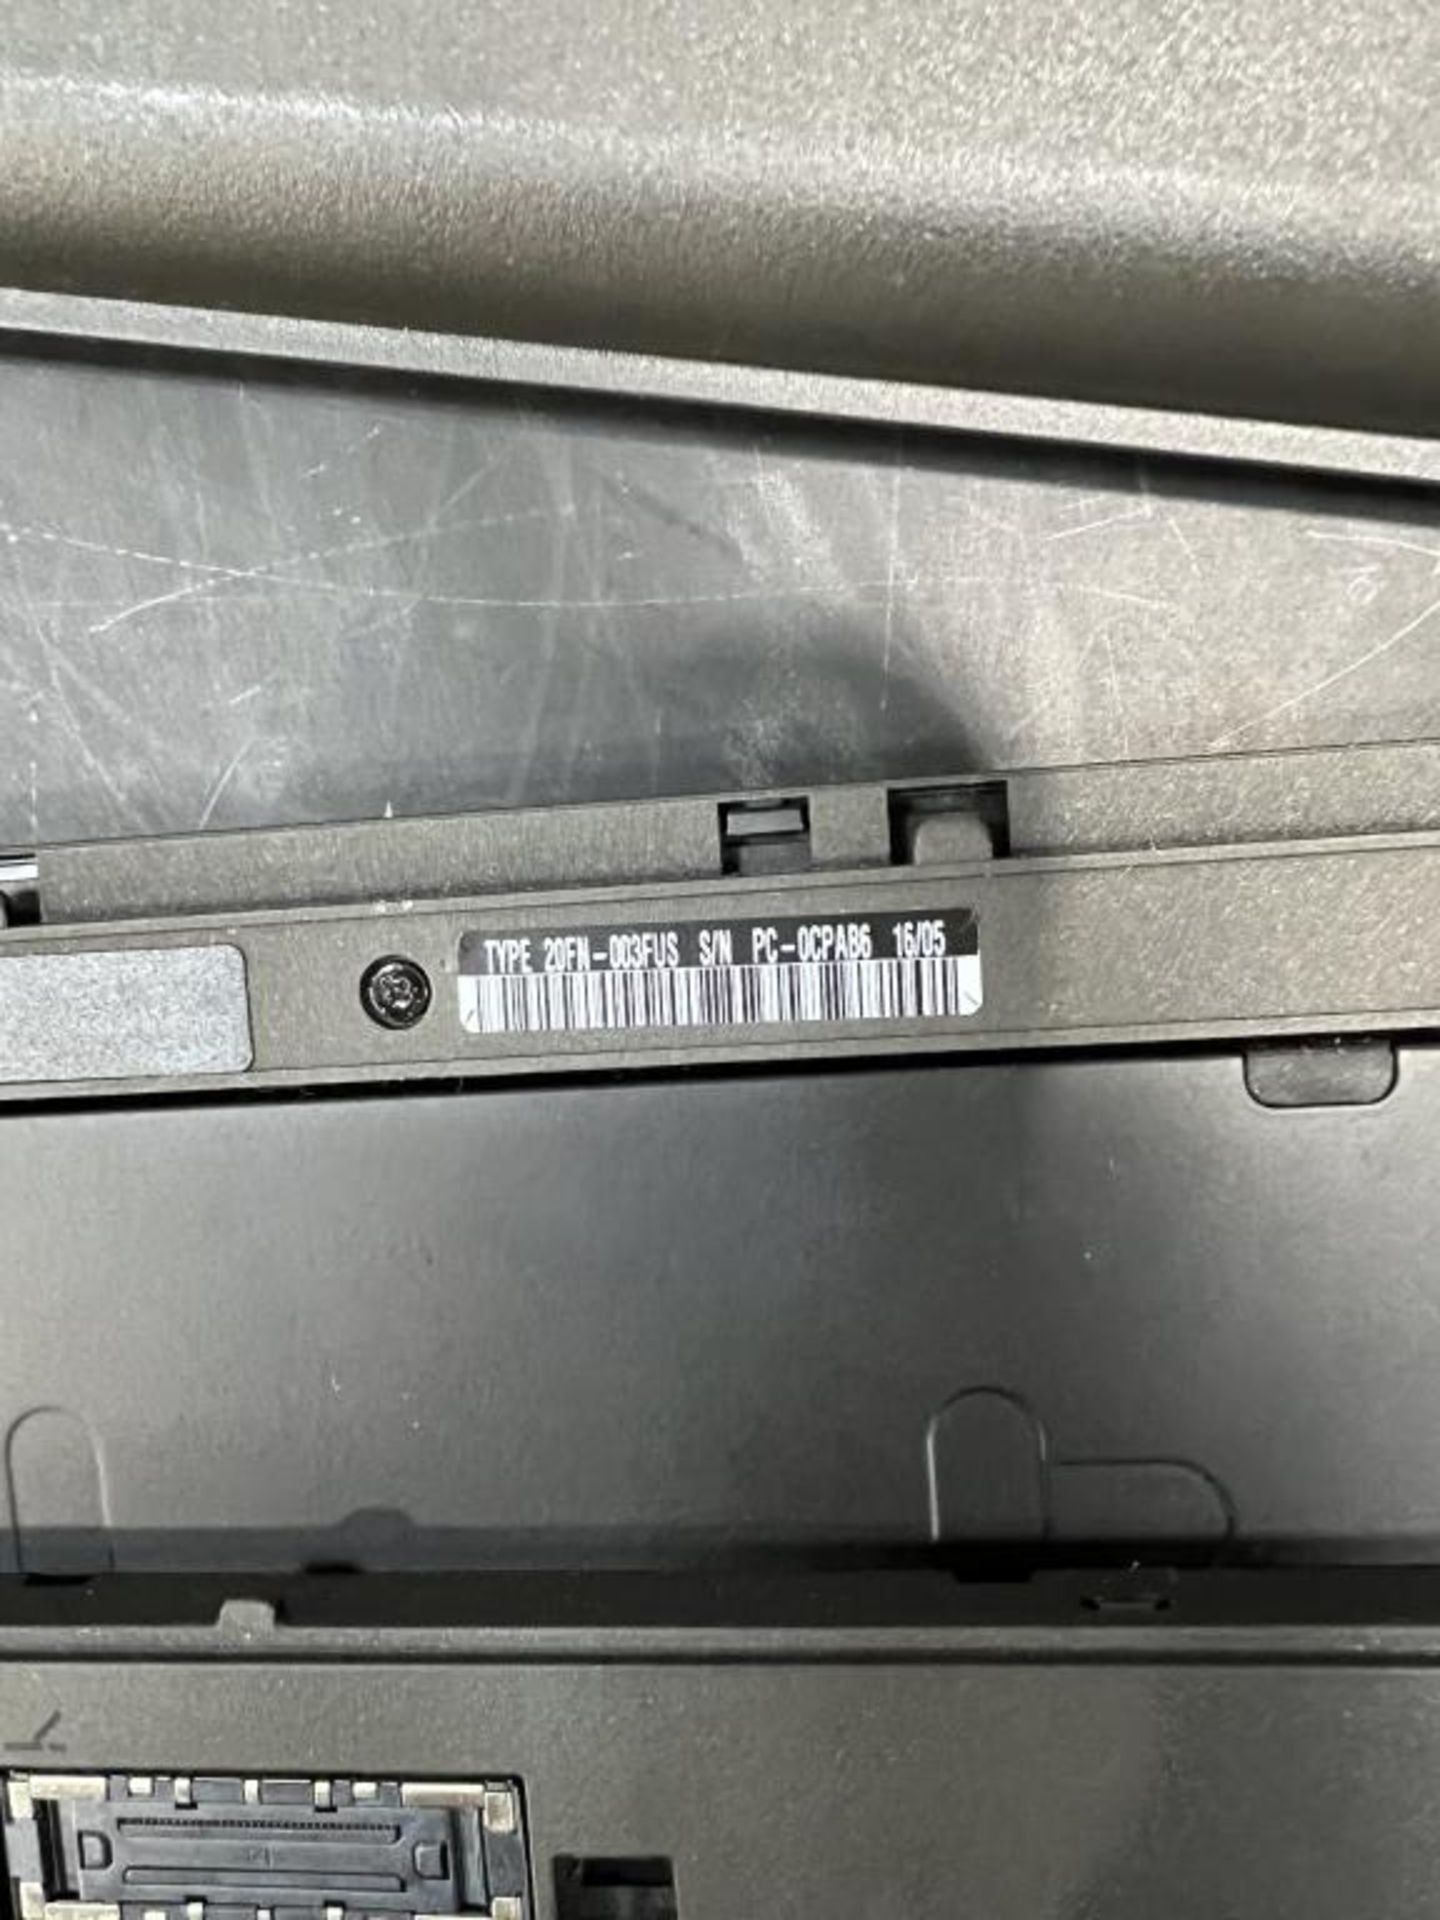 Lenovo T460 Laptop - Image 2 of 2